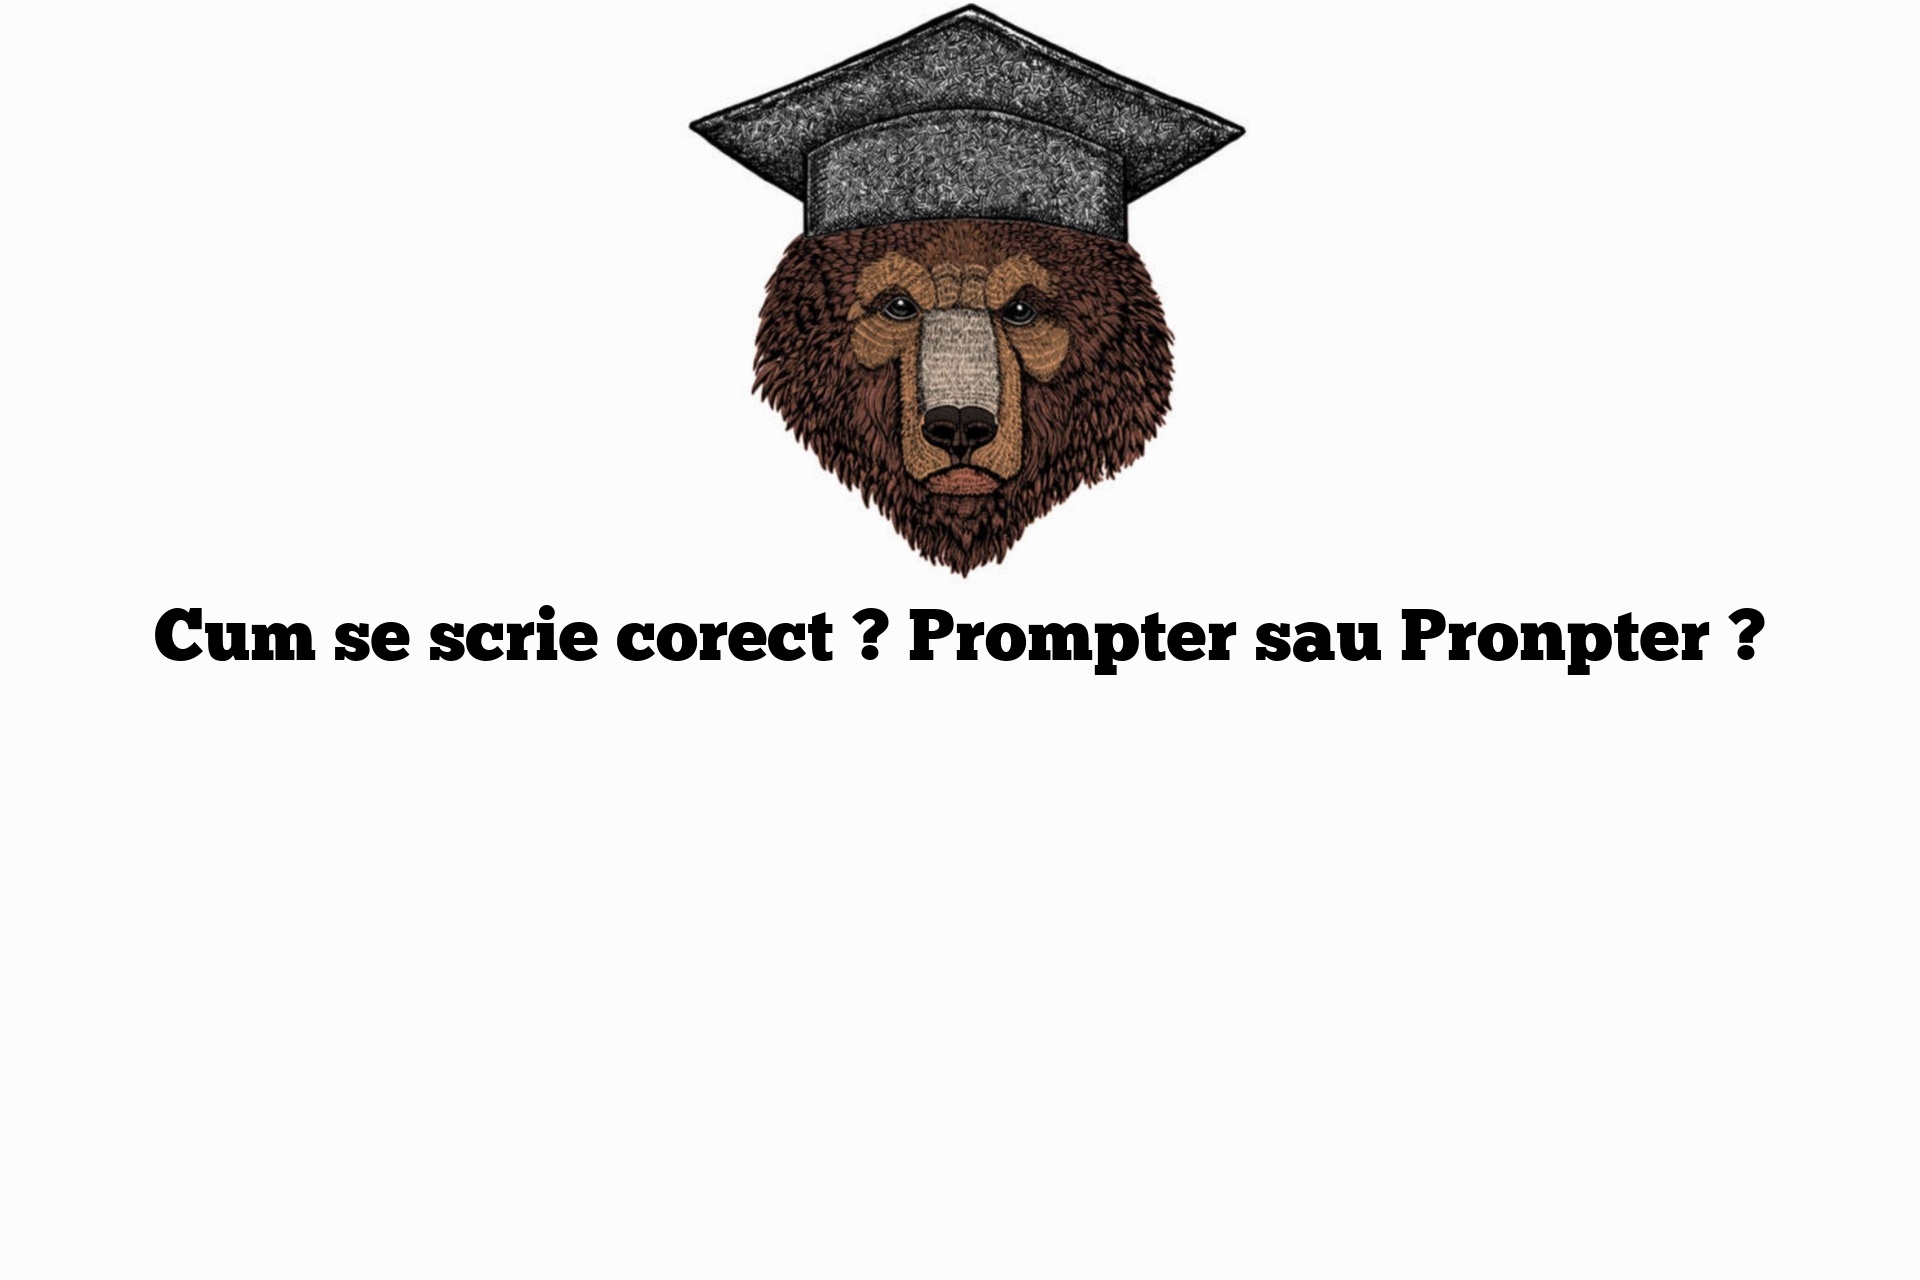 Cum se scrie corect ? Prompter sau Pronpter ?